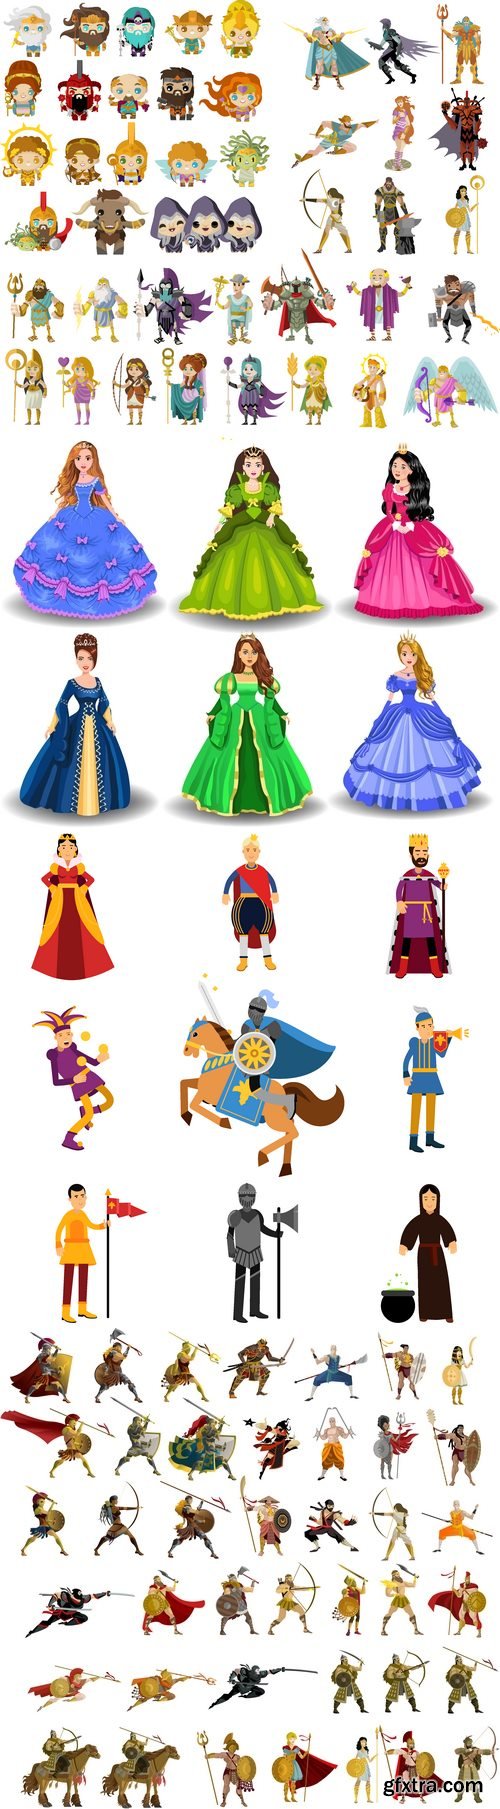 Vectors - Fairy Tale Characters 8